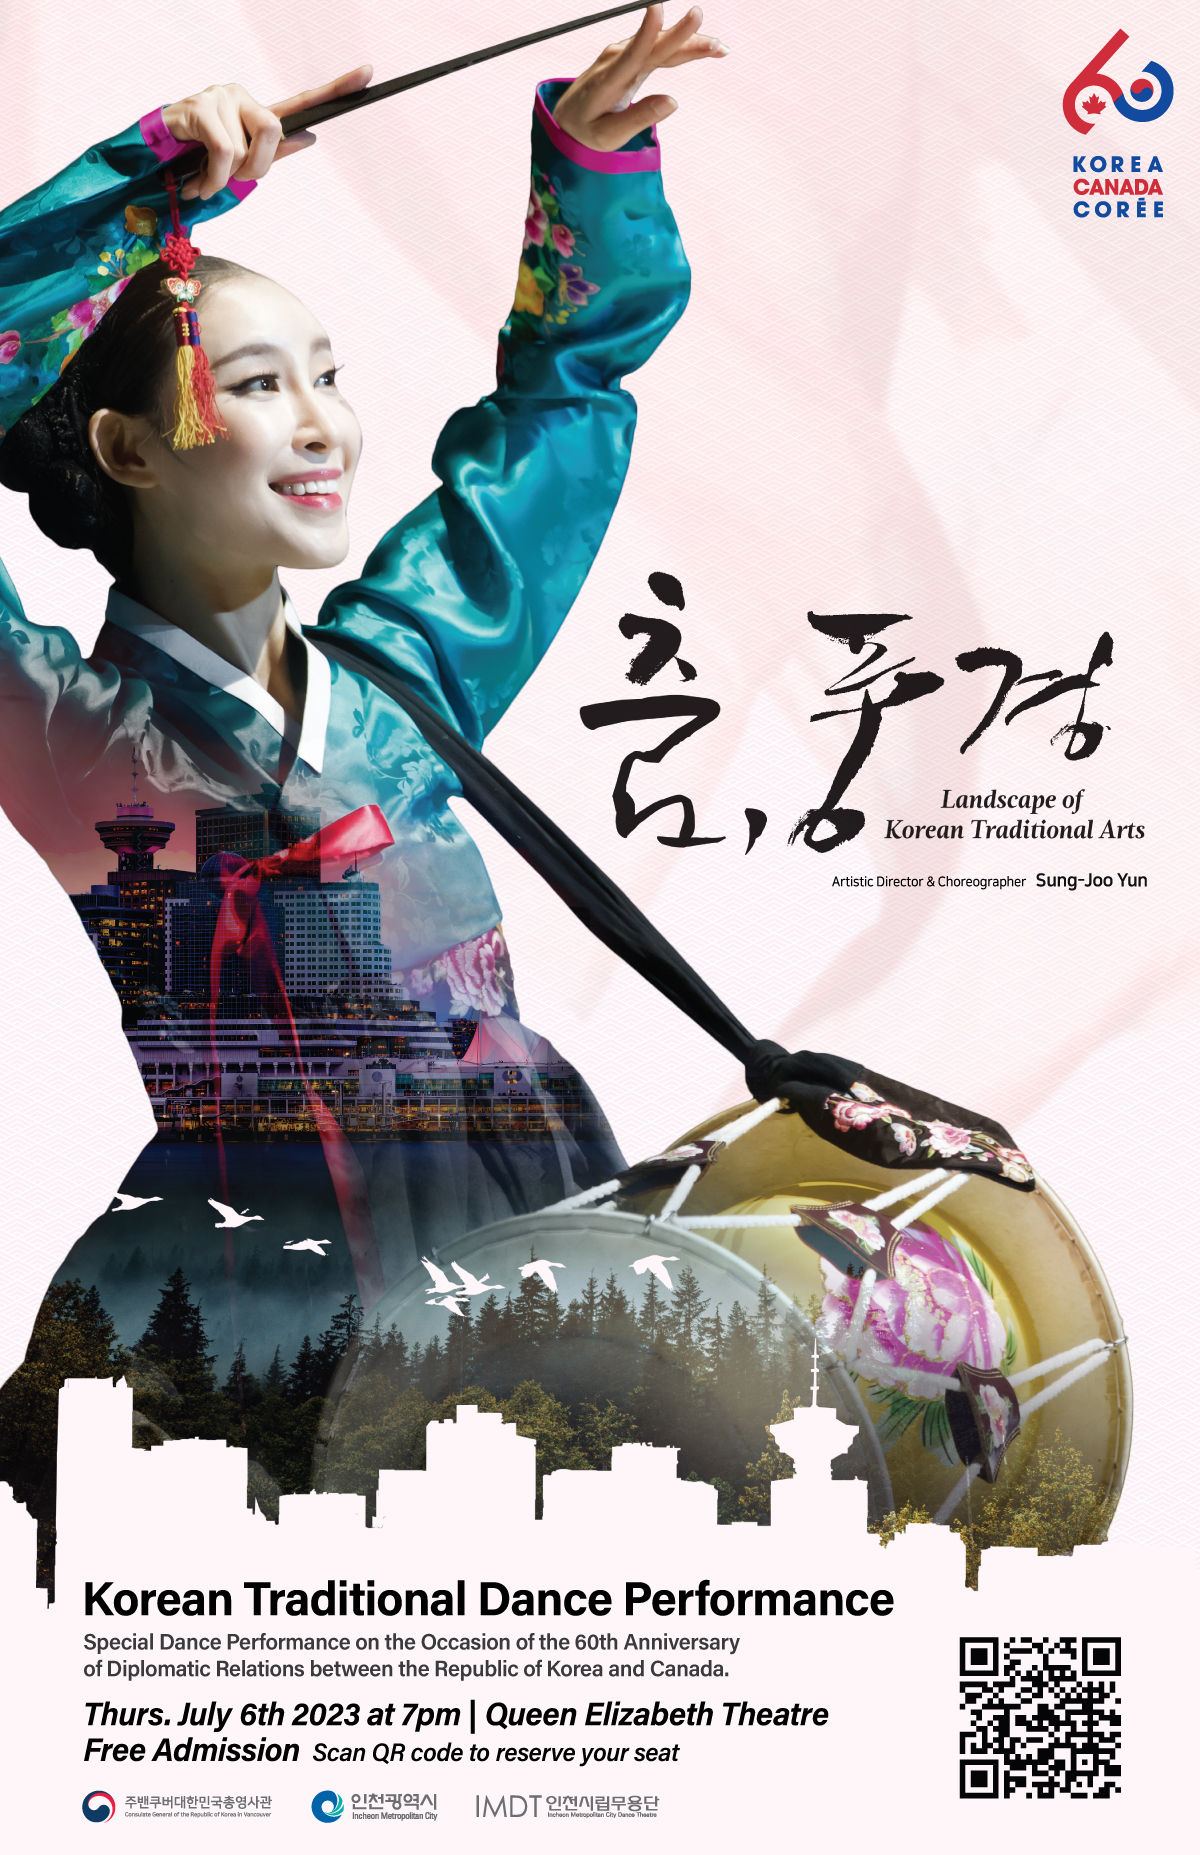 Landscape of Korean Traditional Arts by Incheon Metropolitan City Dance Theatre